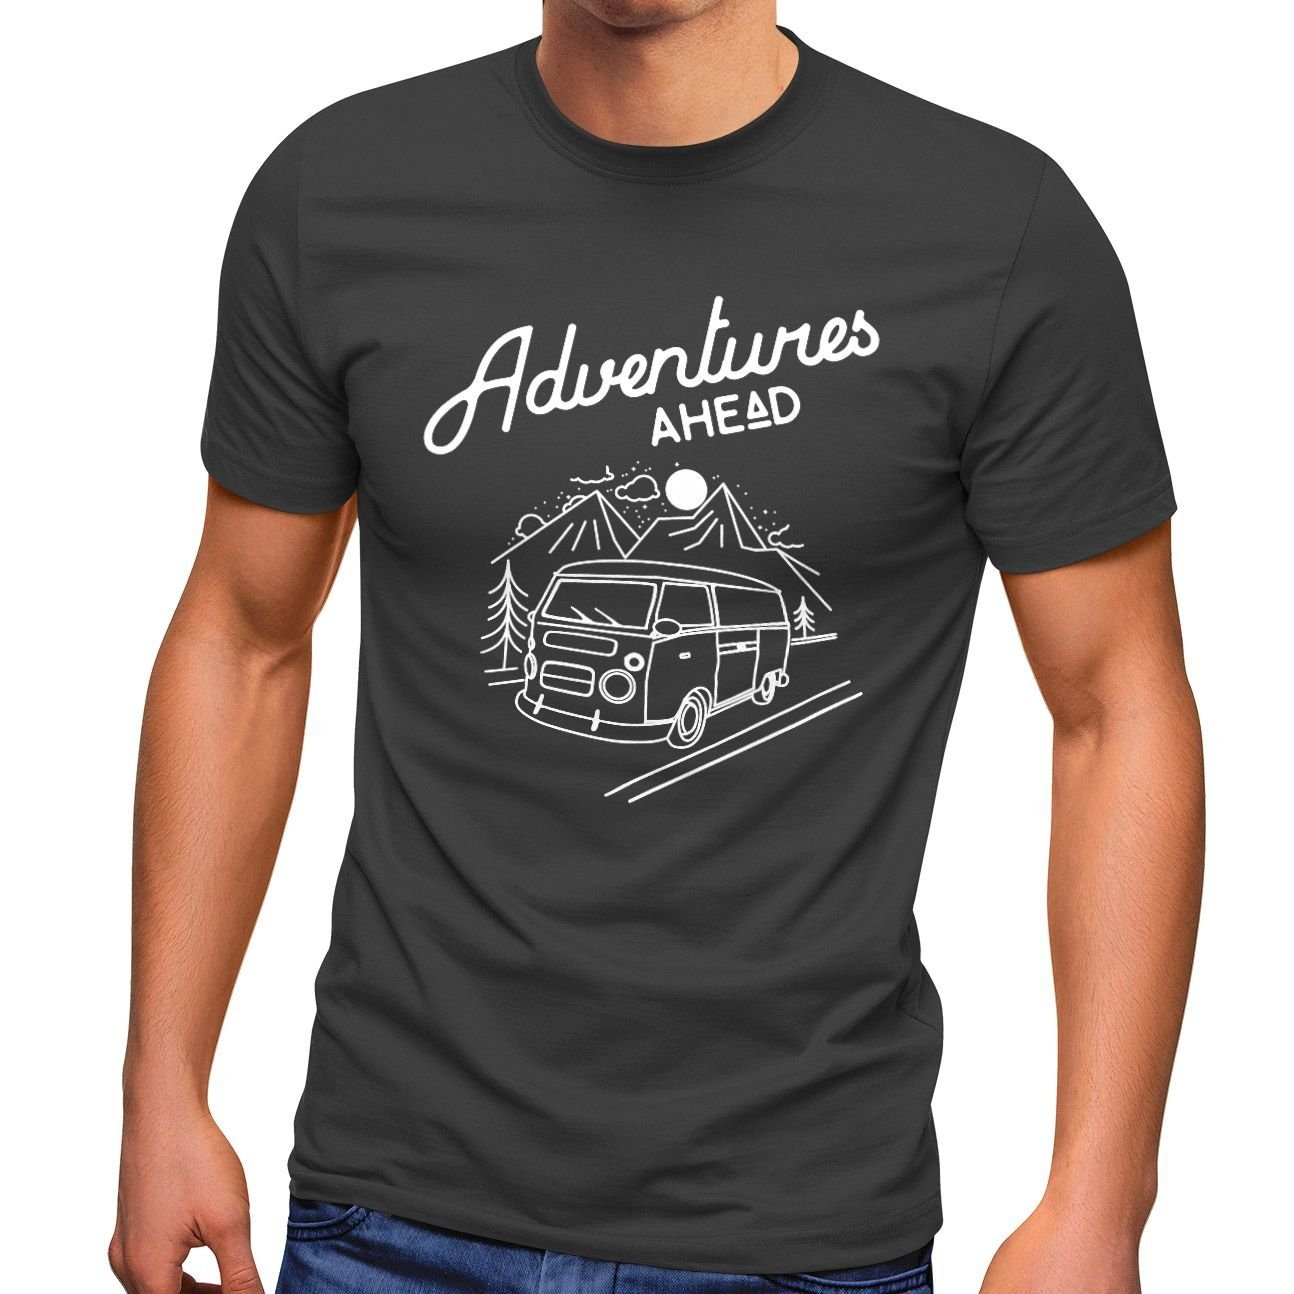 T-Shirt Bus Herren Moonworks® Adventures MoonWorks mit Ahead Print-Shirt Abenteuer Print grau Retro